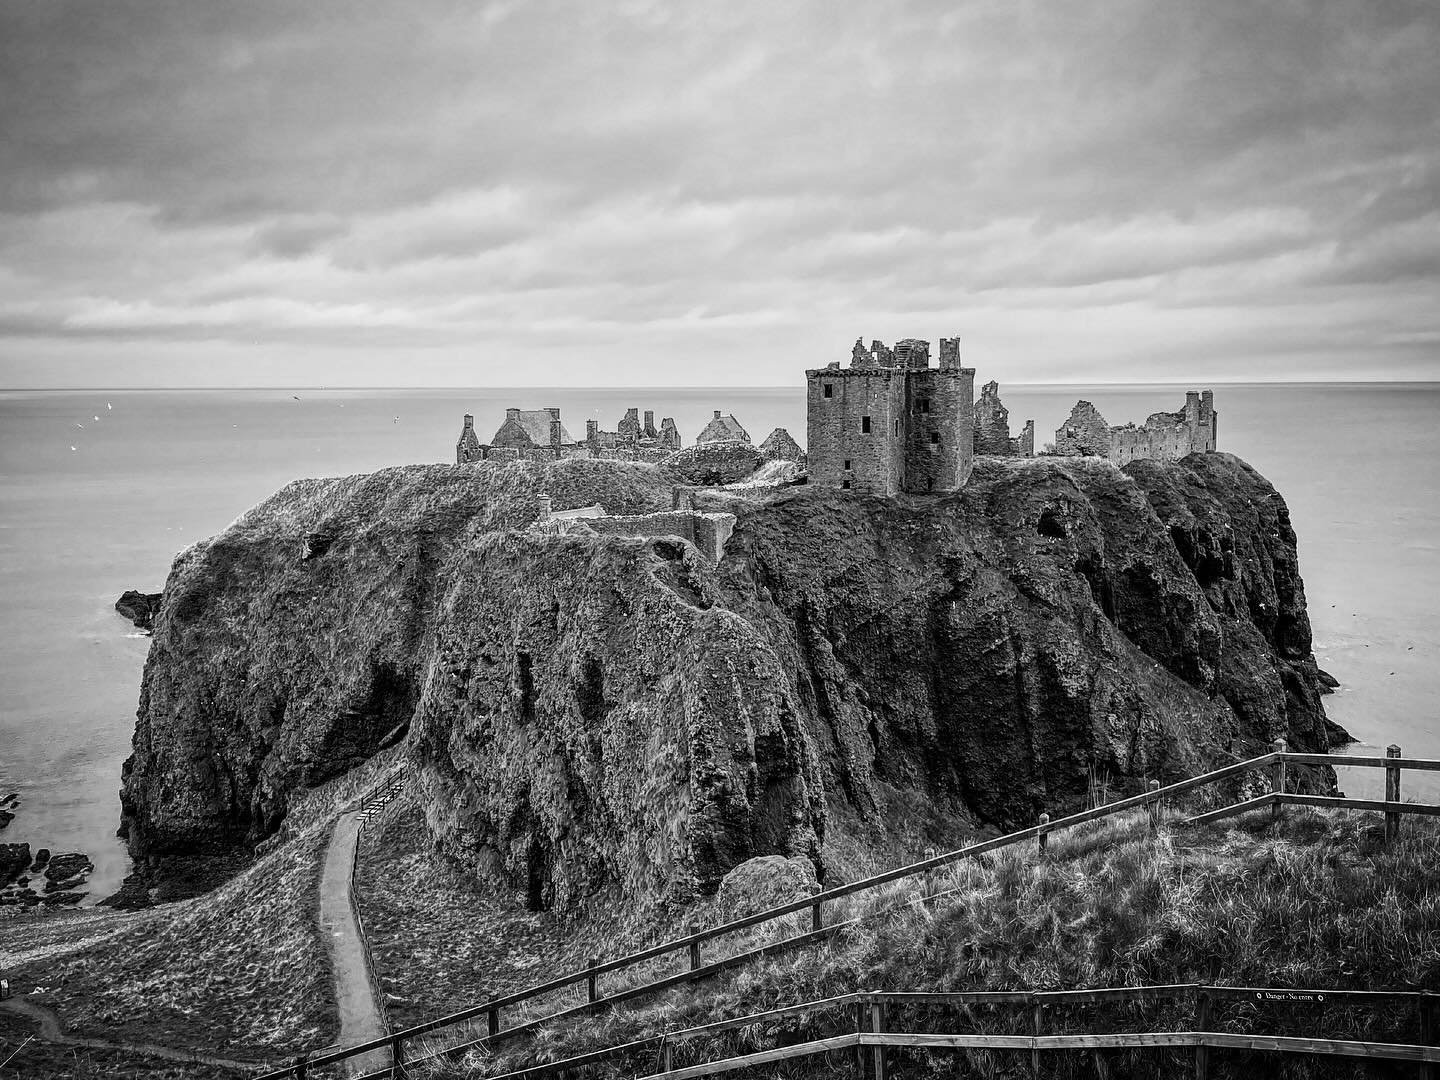 Out of the Deep Blue Sea. #padeapix #dunottar #dunottarcastle #castle #scottishcastle #stonehaven #aberdeenshire #scotland #blackandwhitephotography #landscape #landscapephotography